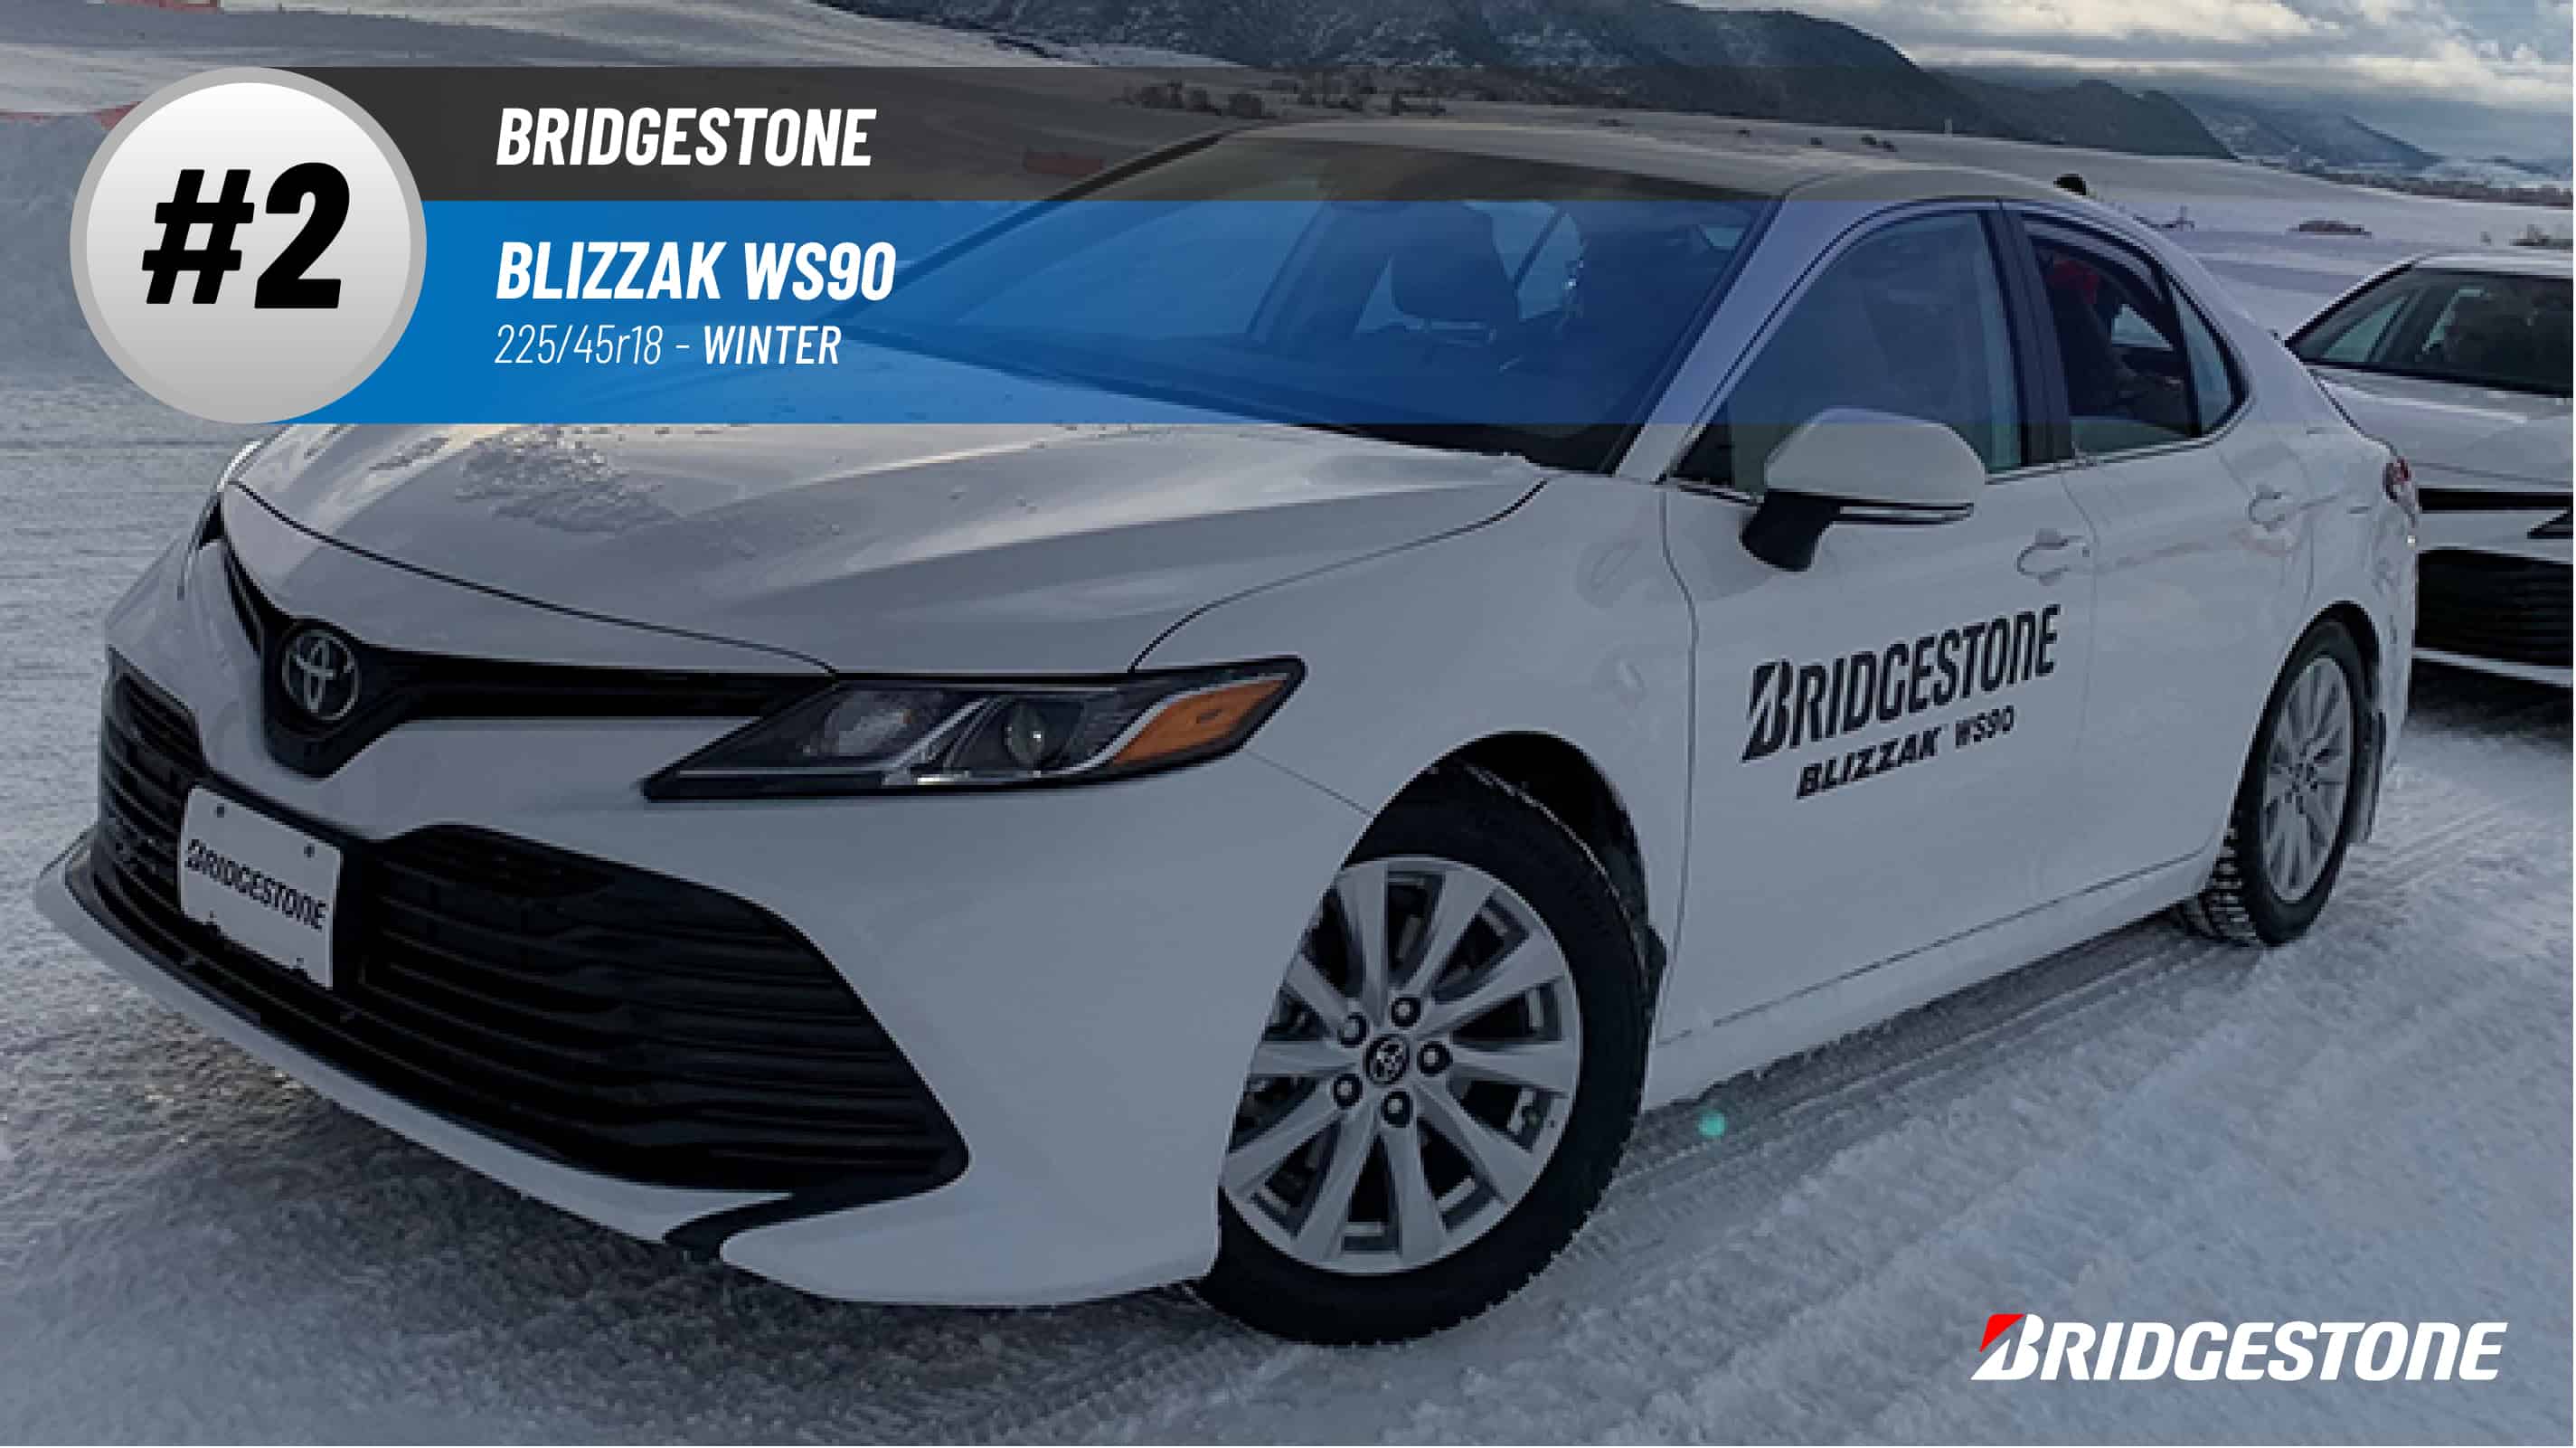 Top #2 Winter Tires: Bridgestone Blizzak WS90 – 225/45r18